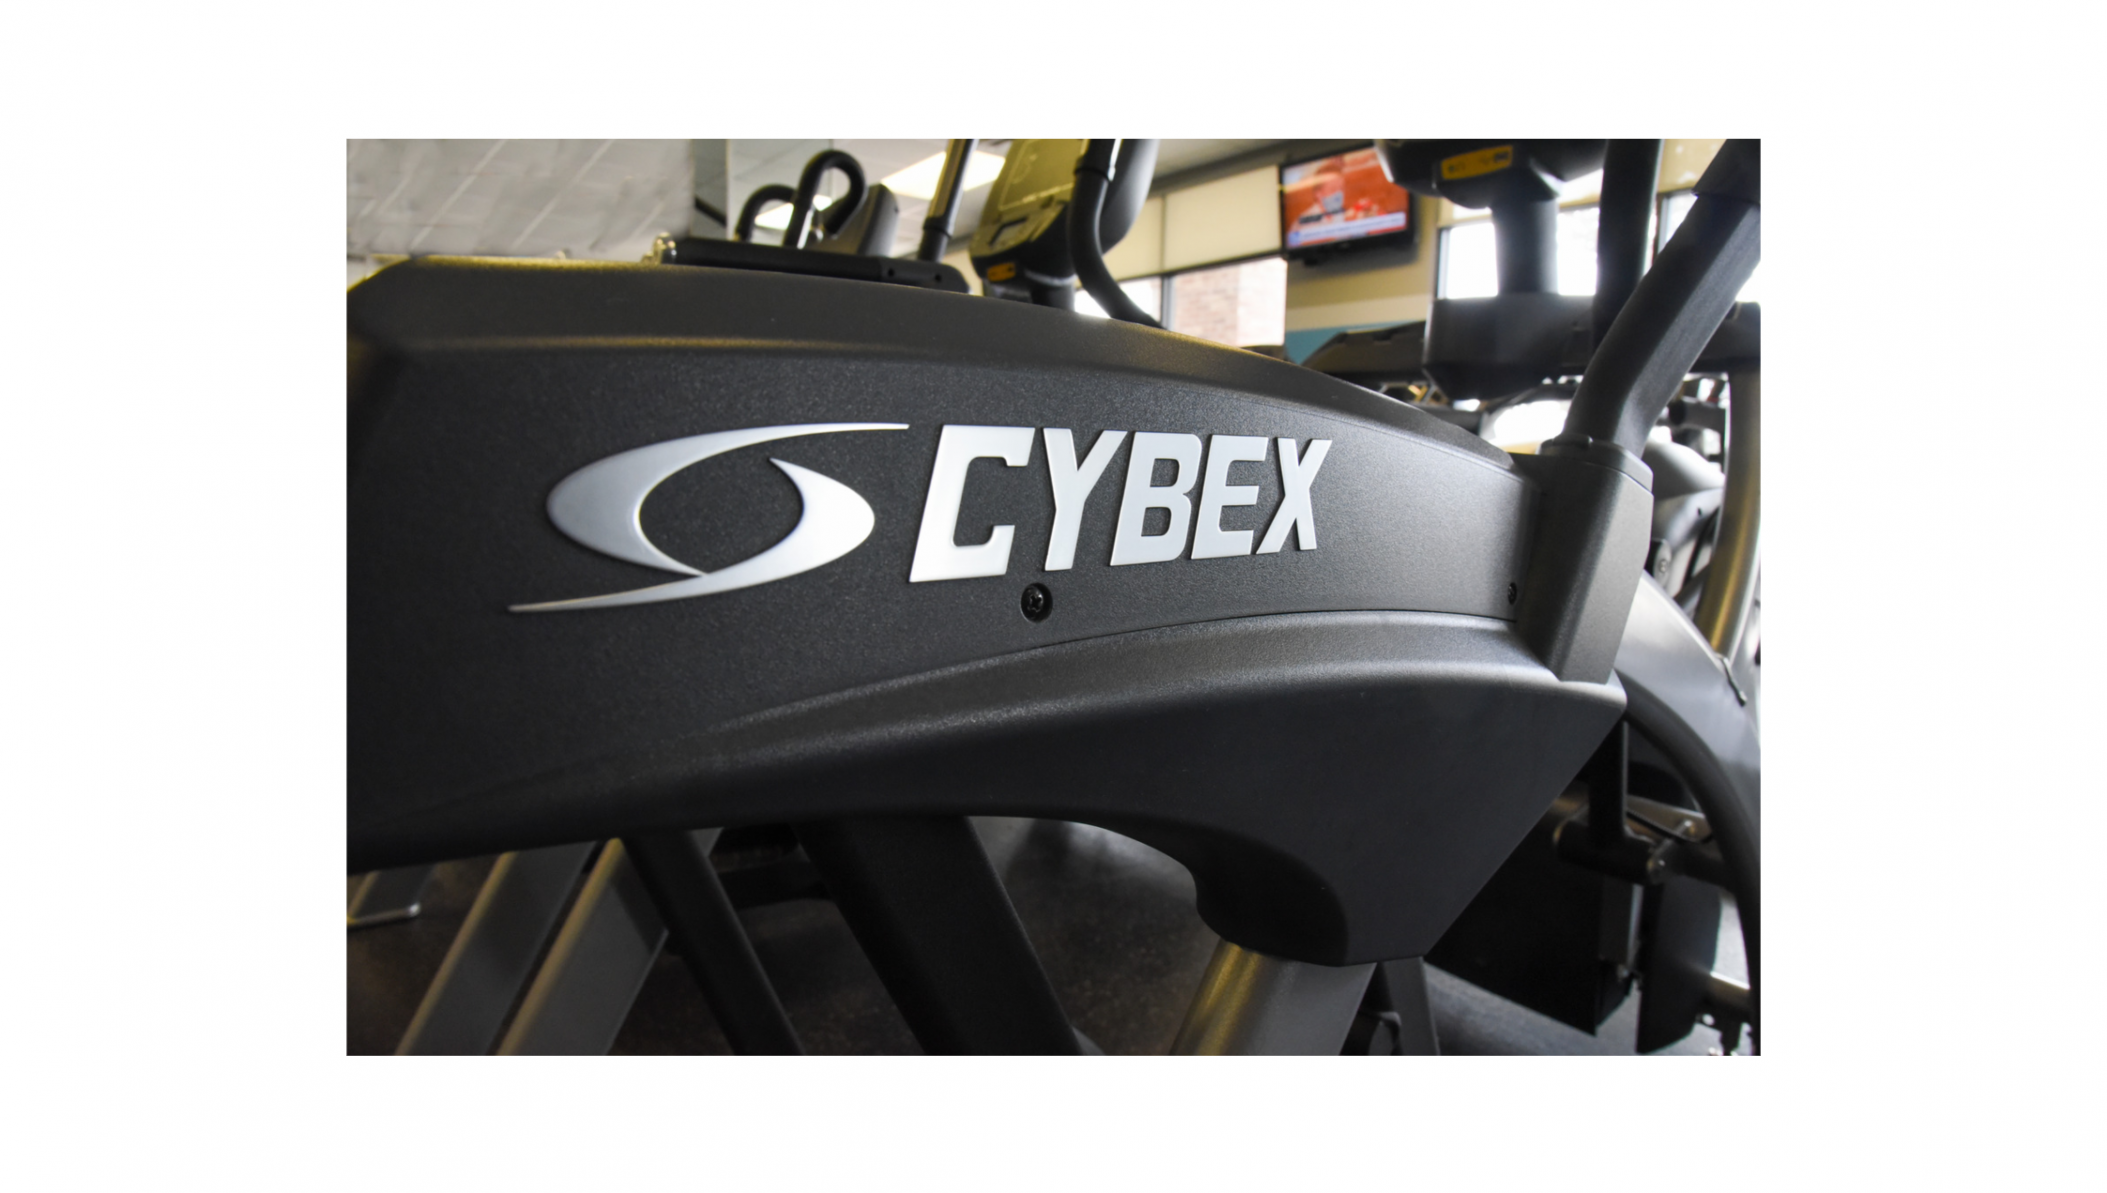 Cybex Logo on Total Body Arc Trainer.